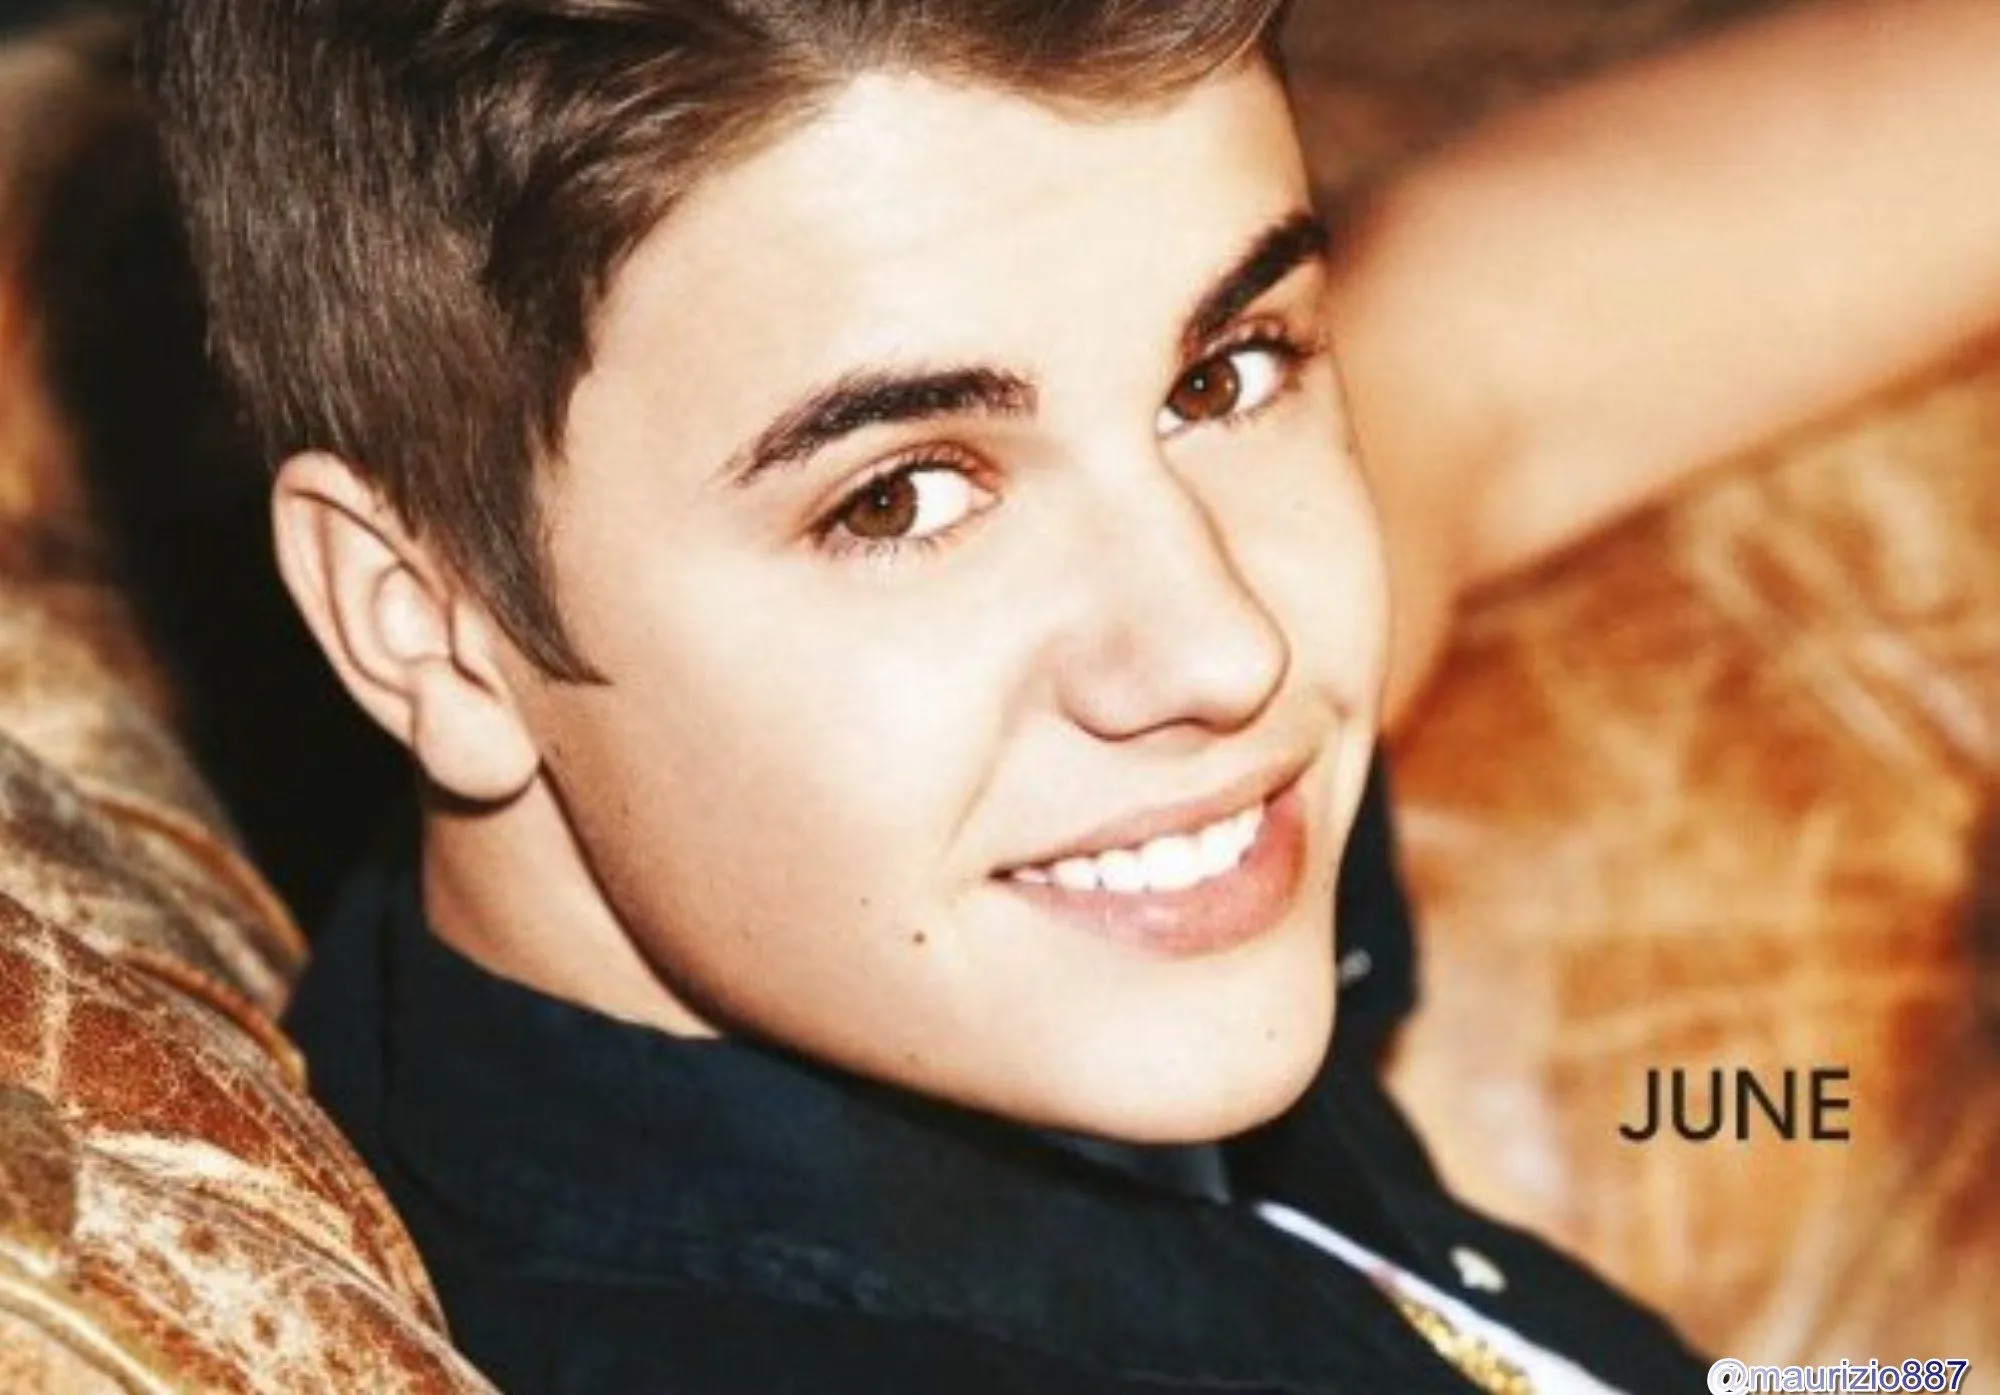 justin bieber, calendar 2013 - Justin Bieber Photo (31617867) - Fanpop